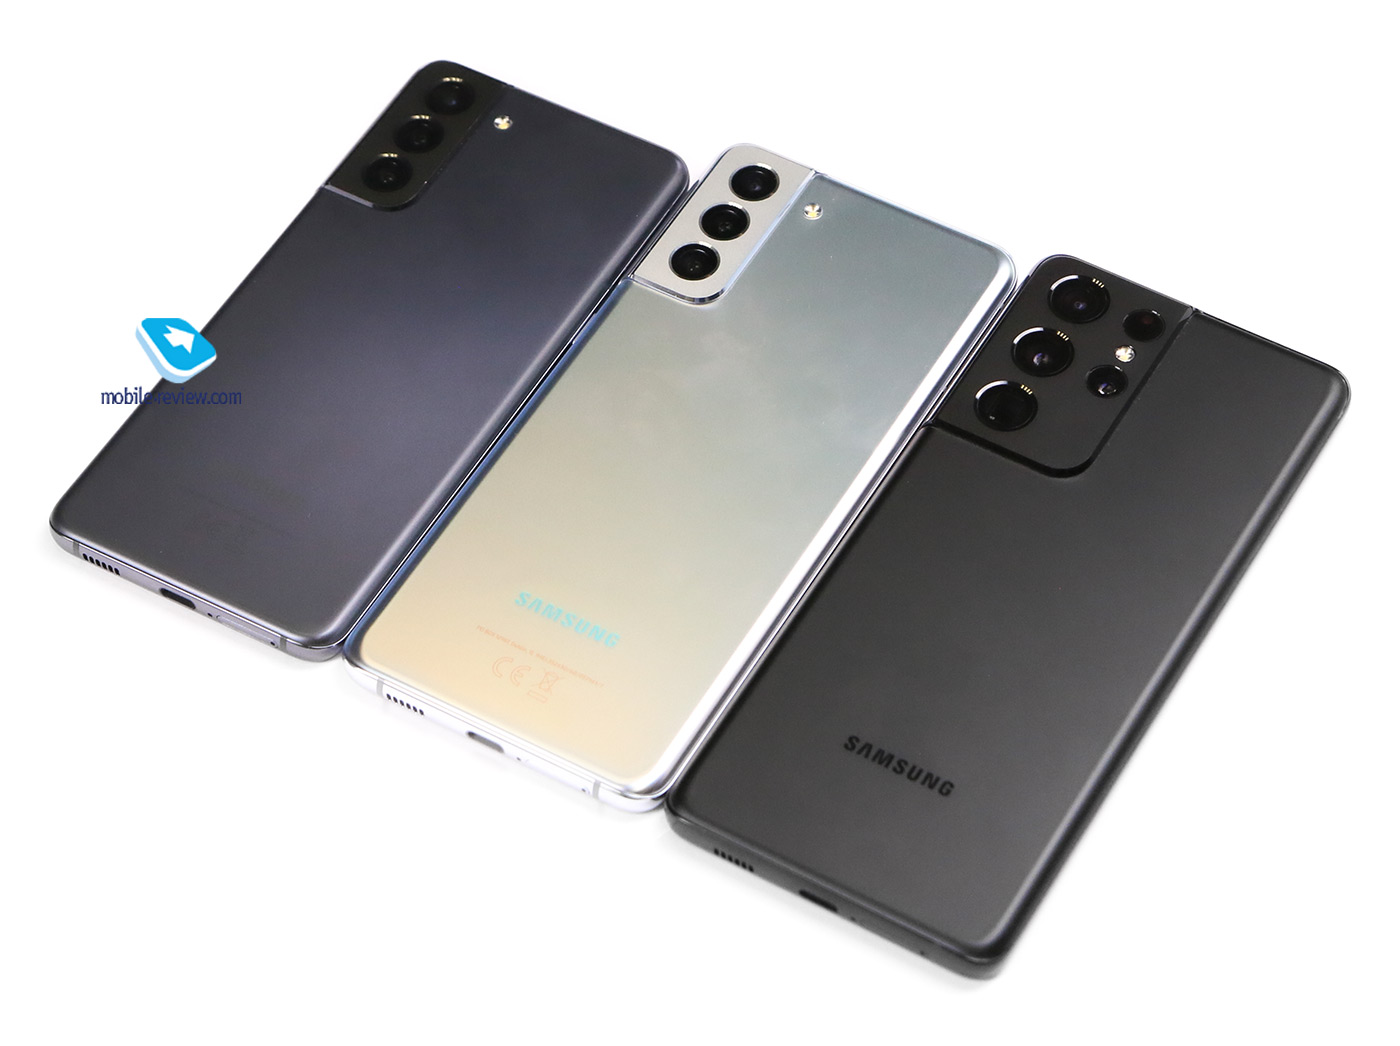   Samsung Galaxy S21 (SM-G991B/DS)